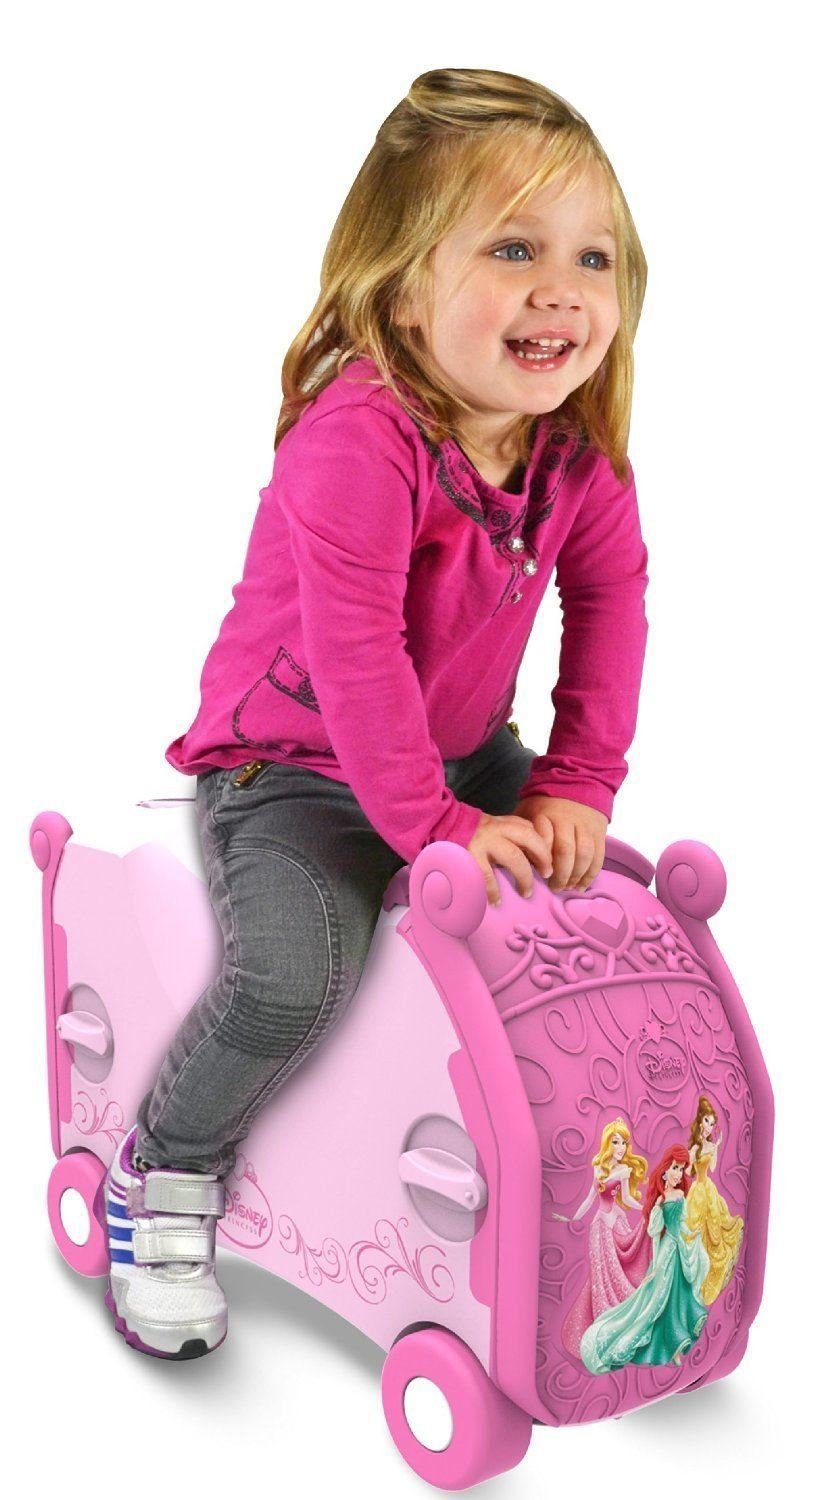 Vrum Disney Princess Childrens Ride-On Suitcase